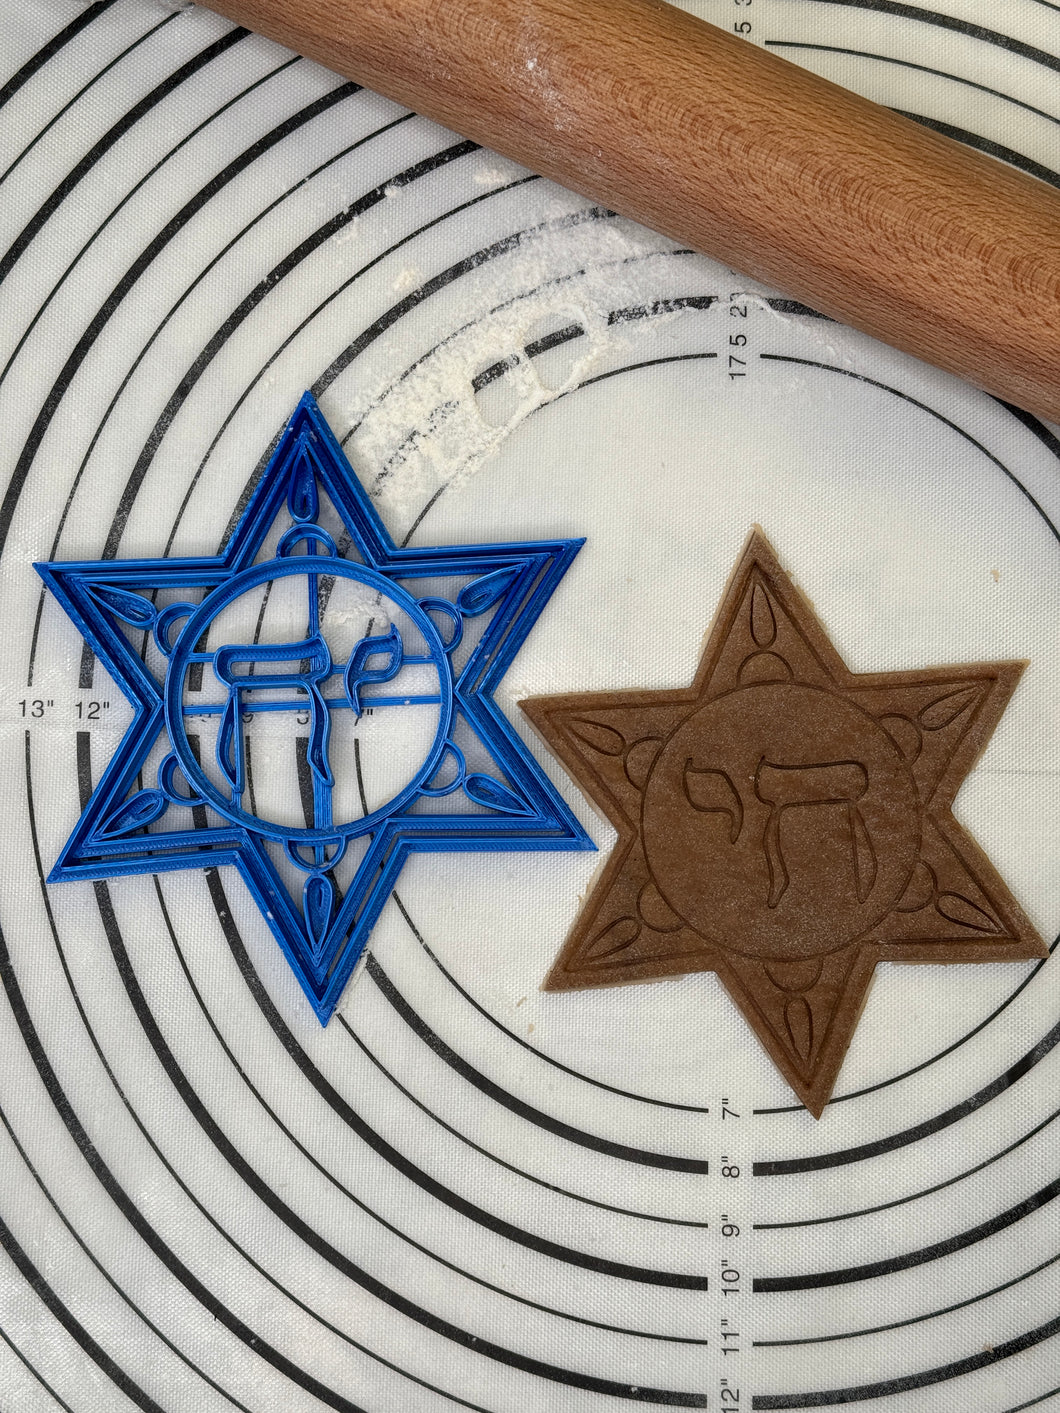 Chai חי Magen Dovid Jewish Star David’s Star